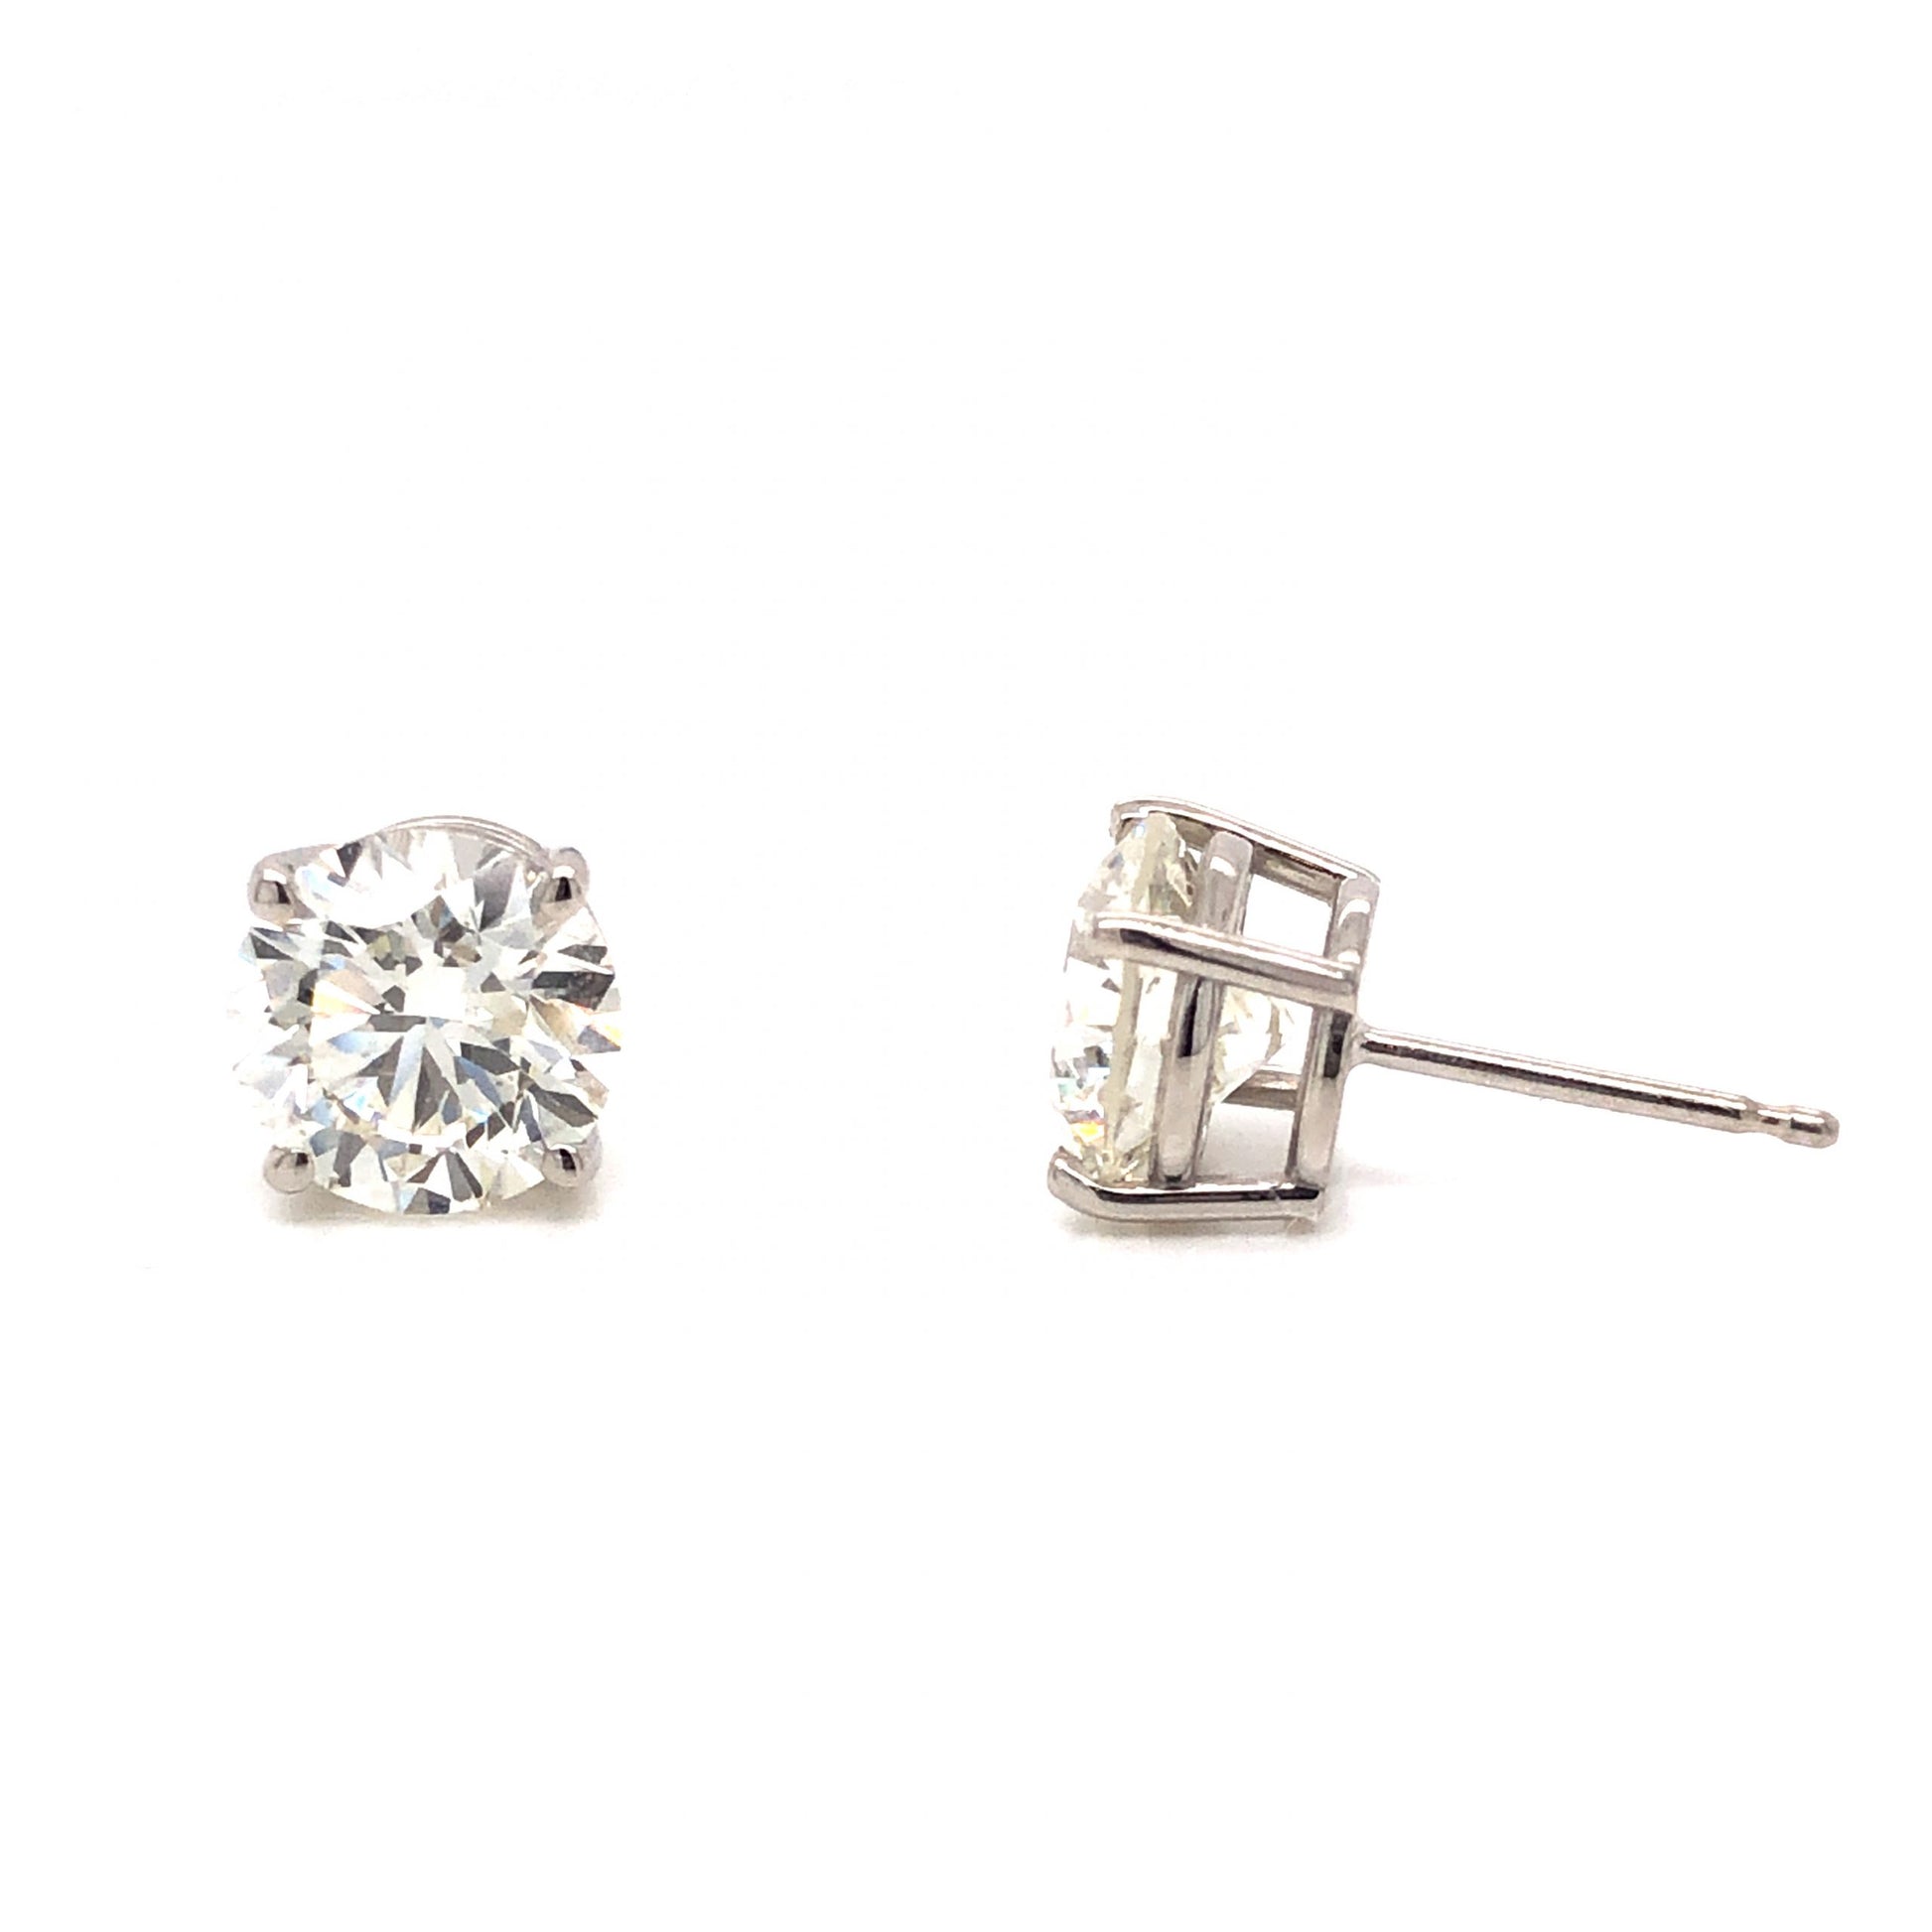 3.30 GIA Diamond Stud Earrings in 14k White GoldComposition: 14 Karat White Gold Total Diamond Weight: 3.30ct Total Gram Weight: 1.13 g Inscription: 14K
      